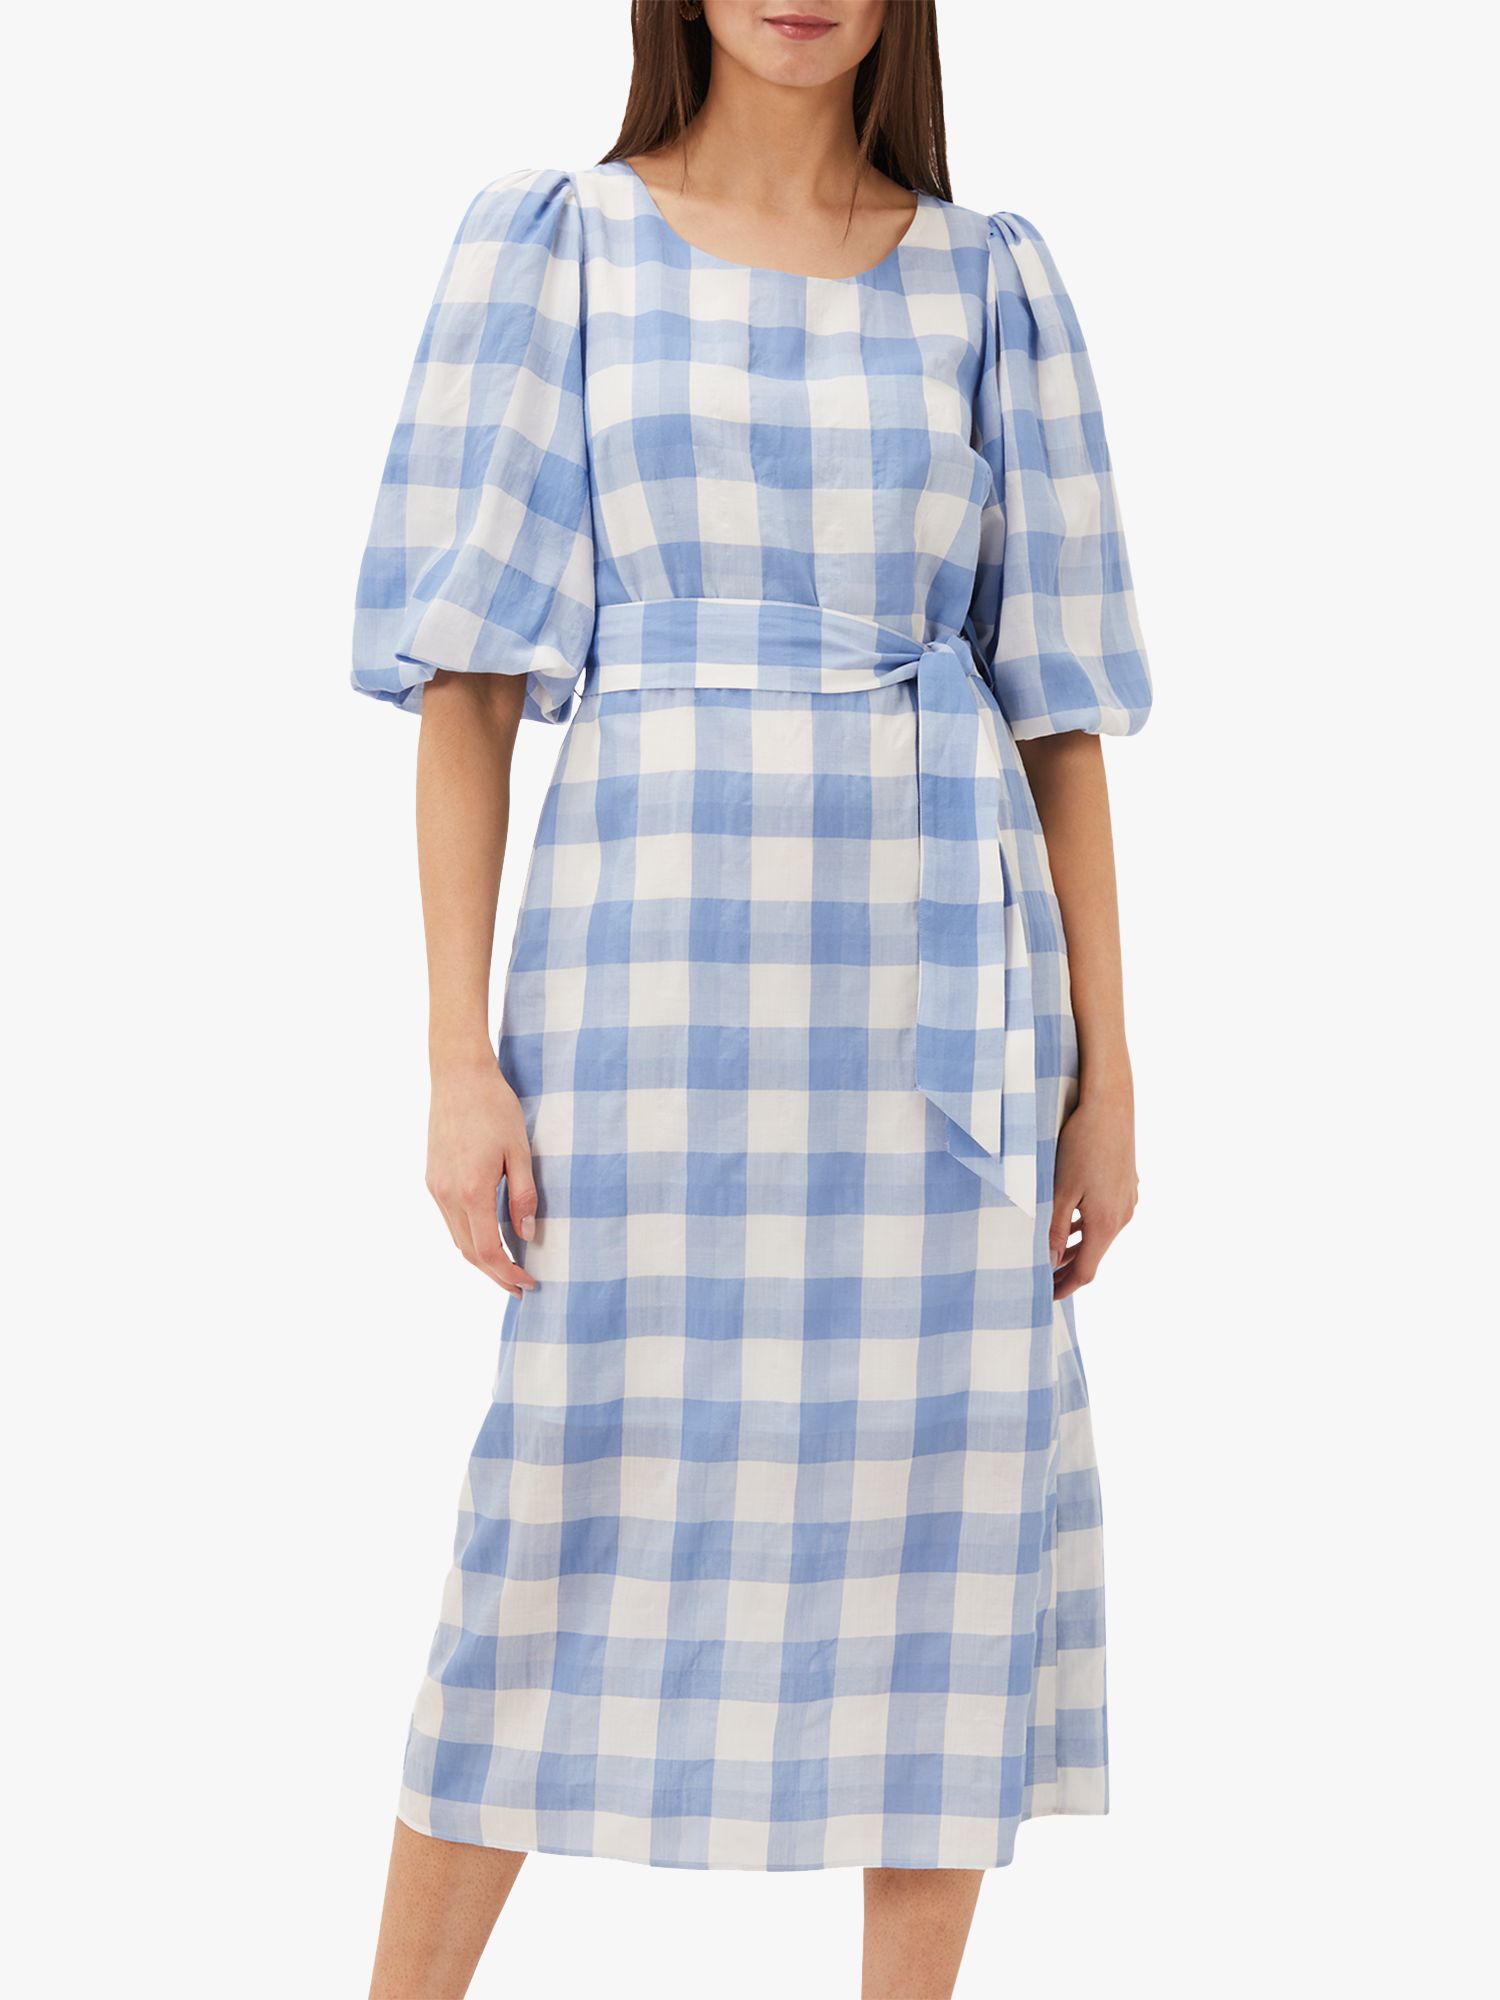 Phase Eight Alina Gingham Midi Dress, Blue/White, 8